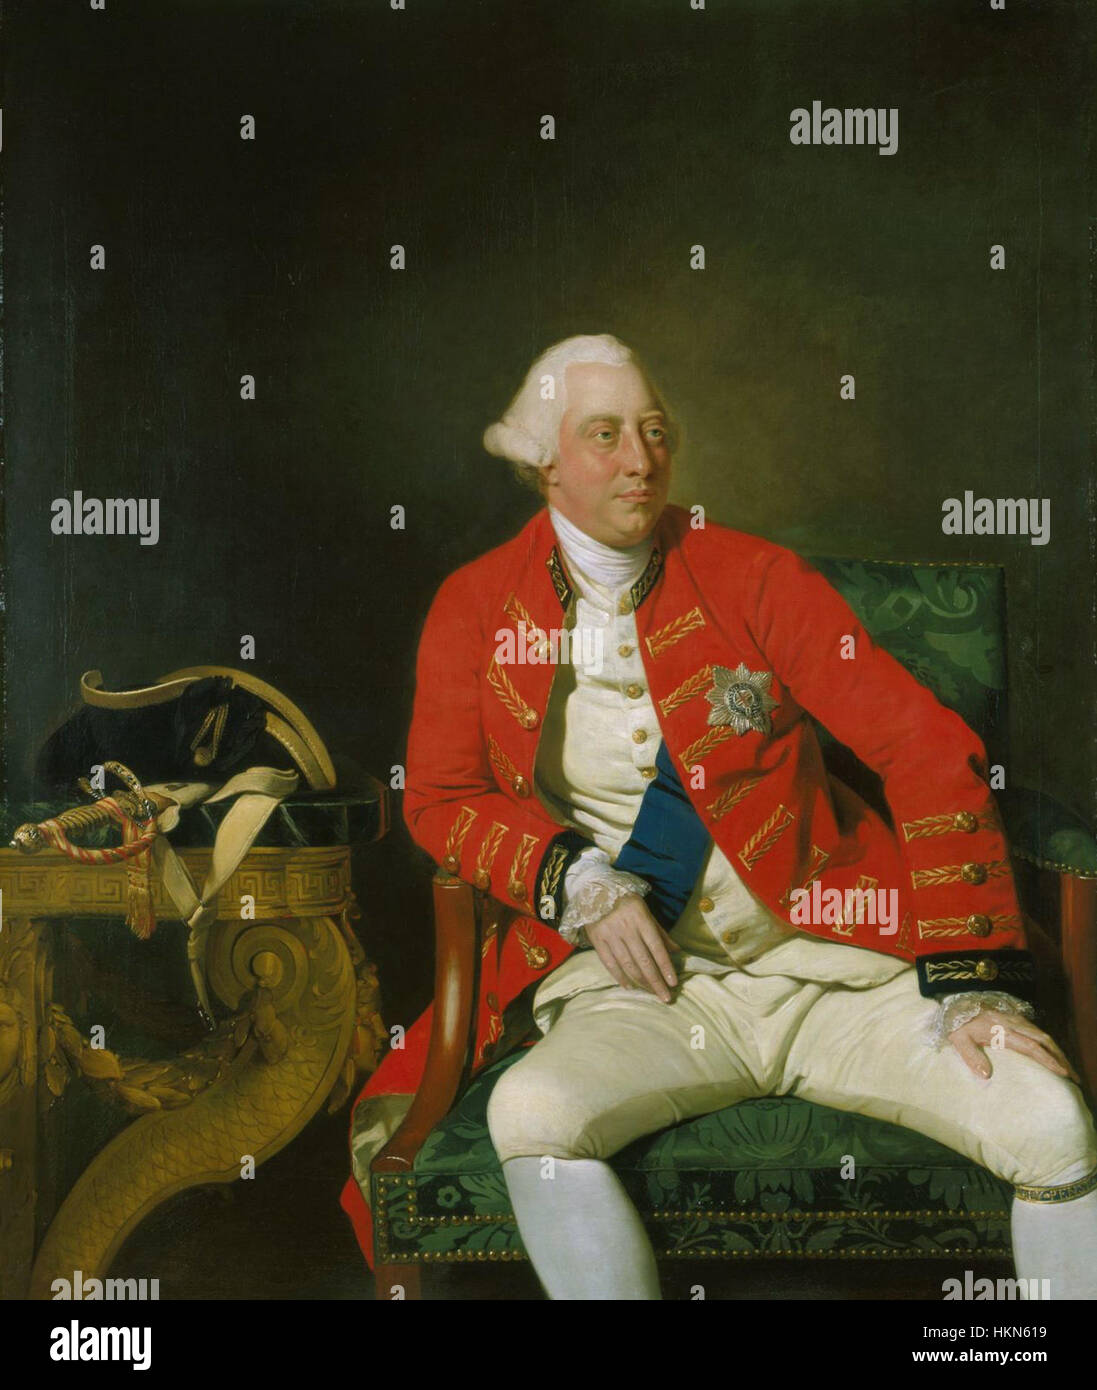 King George III of England by Johann Zoffany Stock Photo